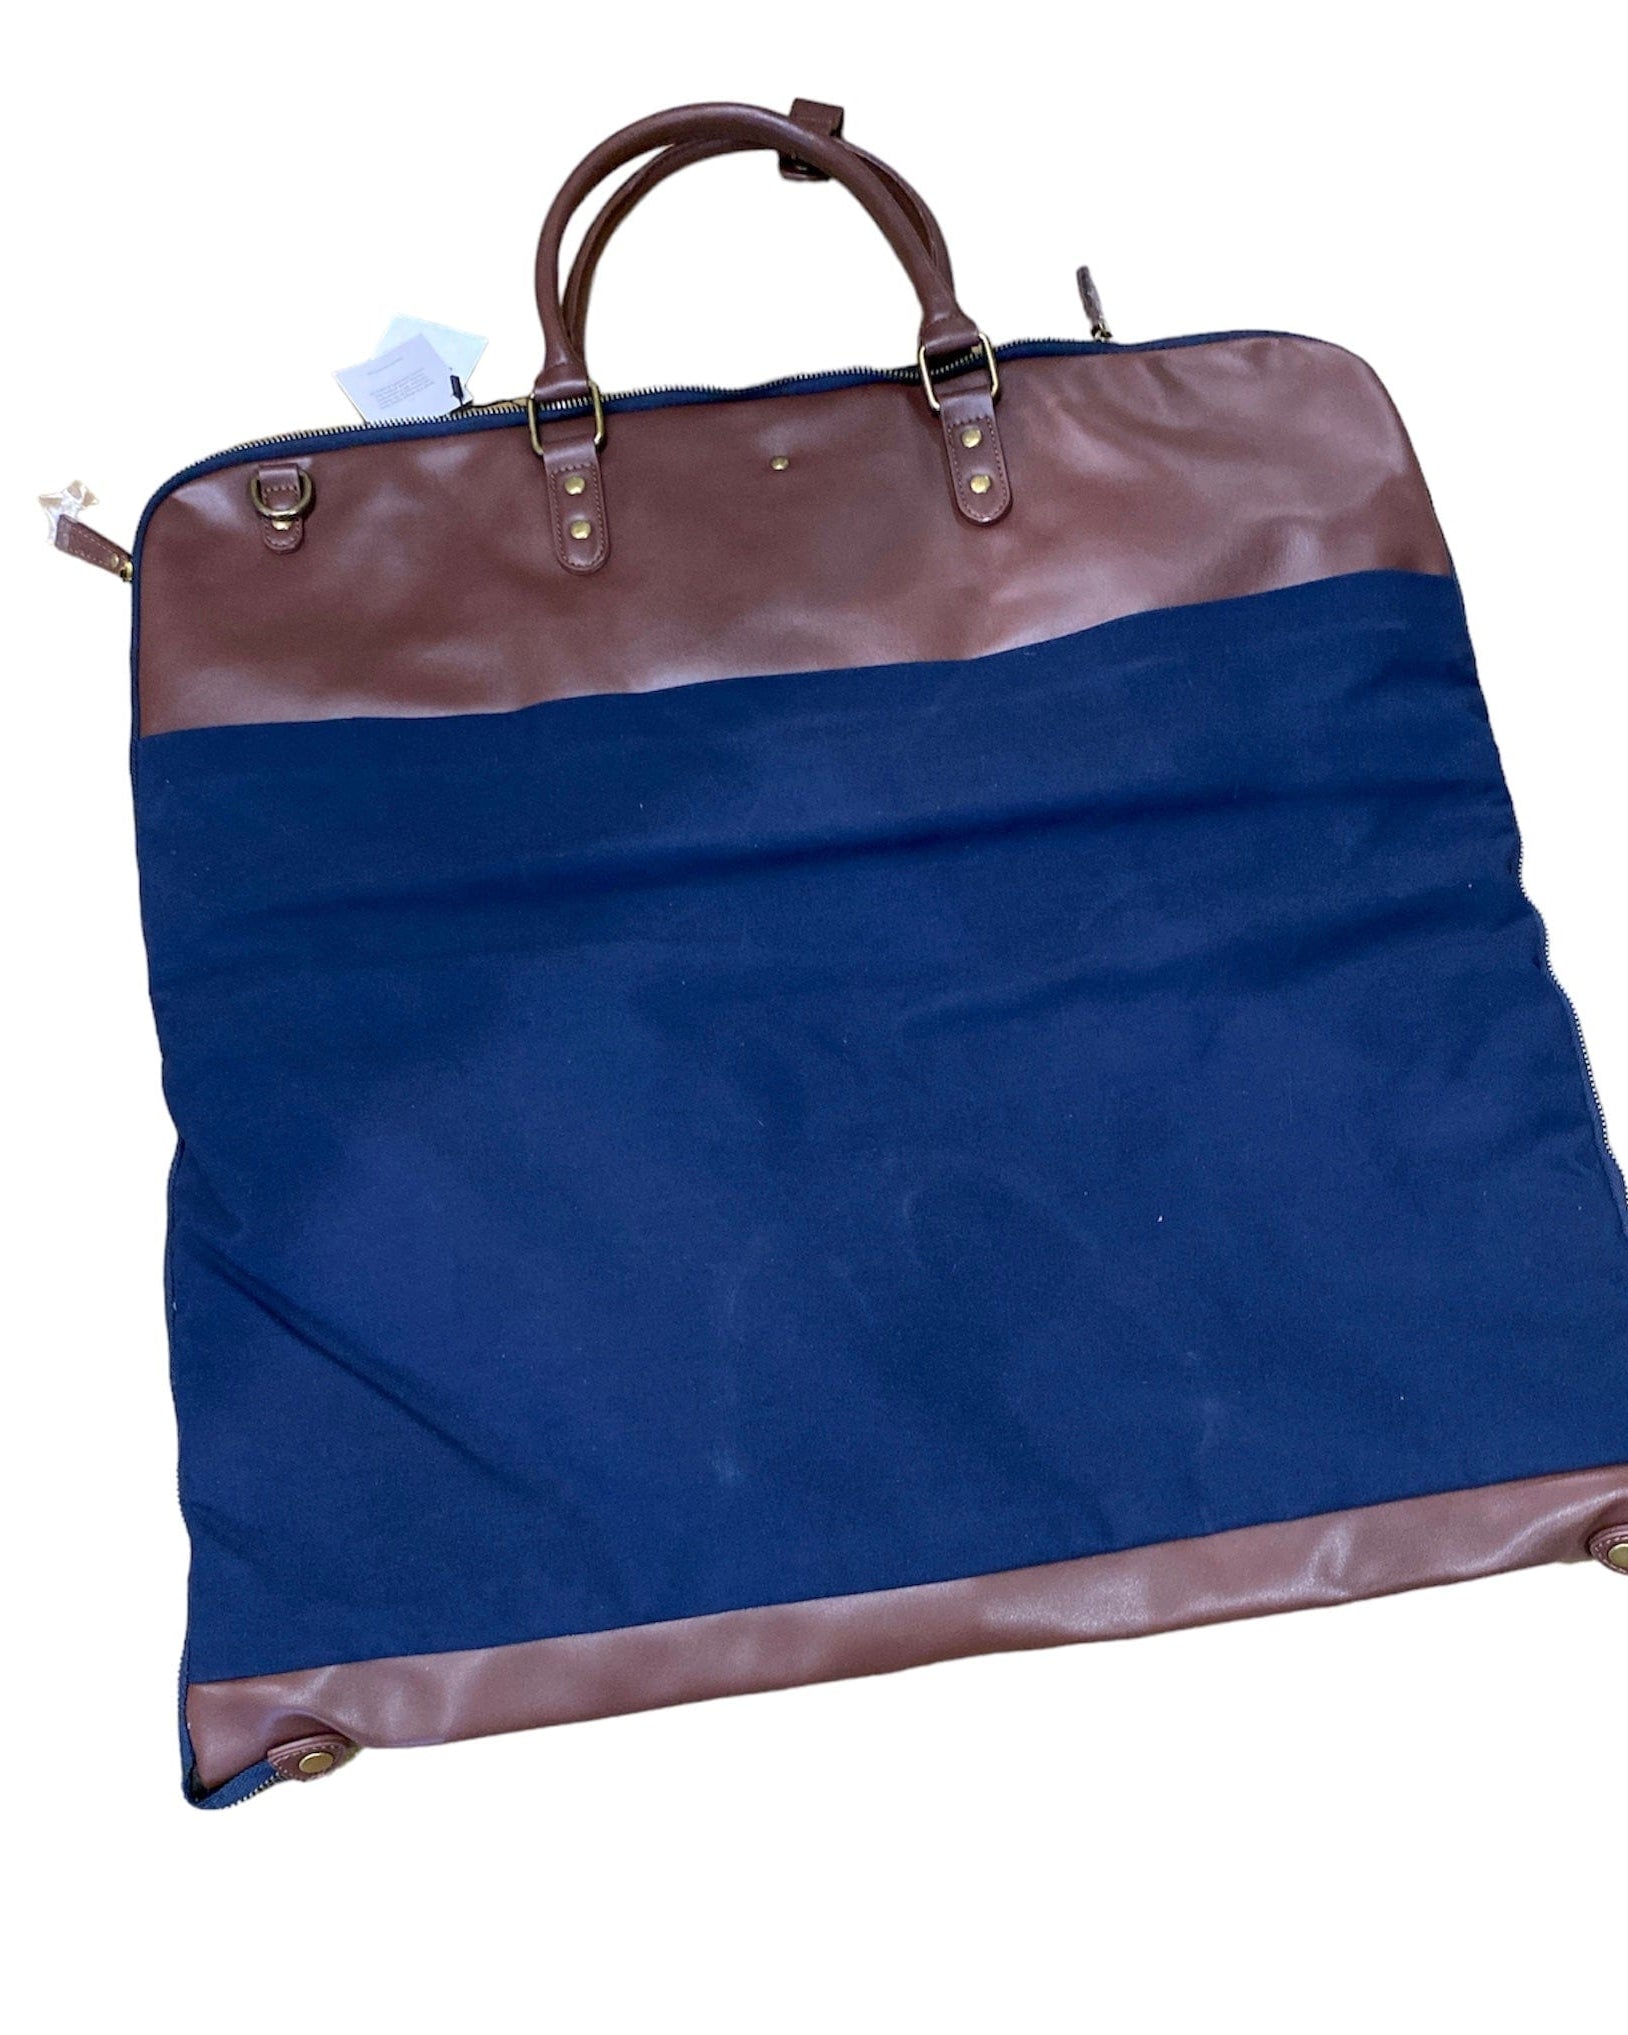 Brouk & Co. Travel Accessories Blue Brouk & Co. Skyler Garment Bag